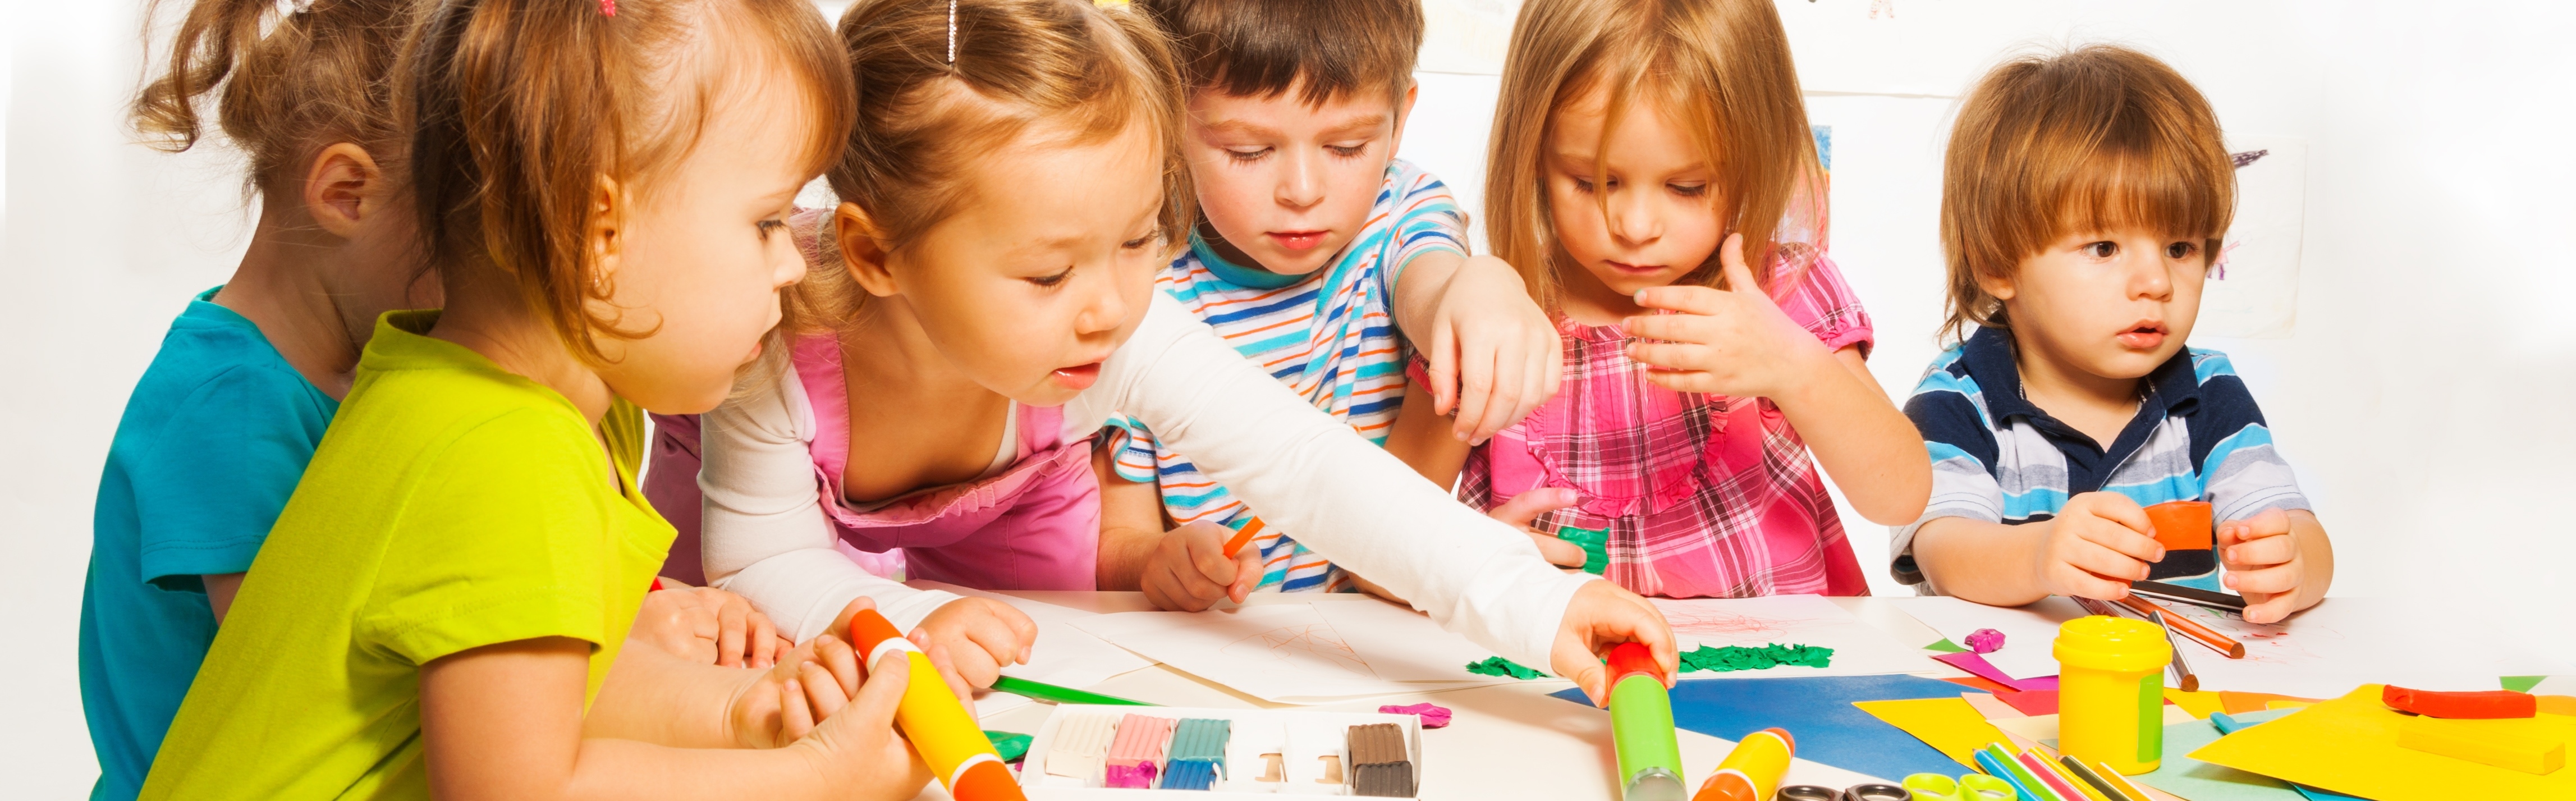 choosing-childcare-for-preschool-children-3-6-years